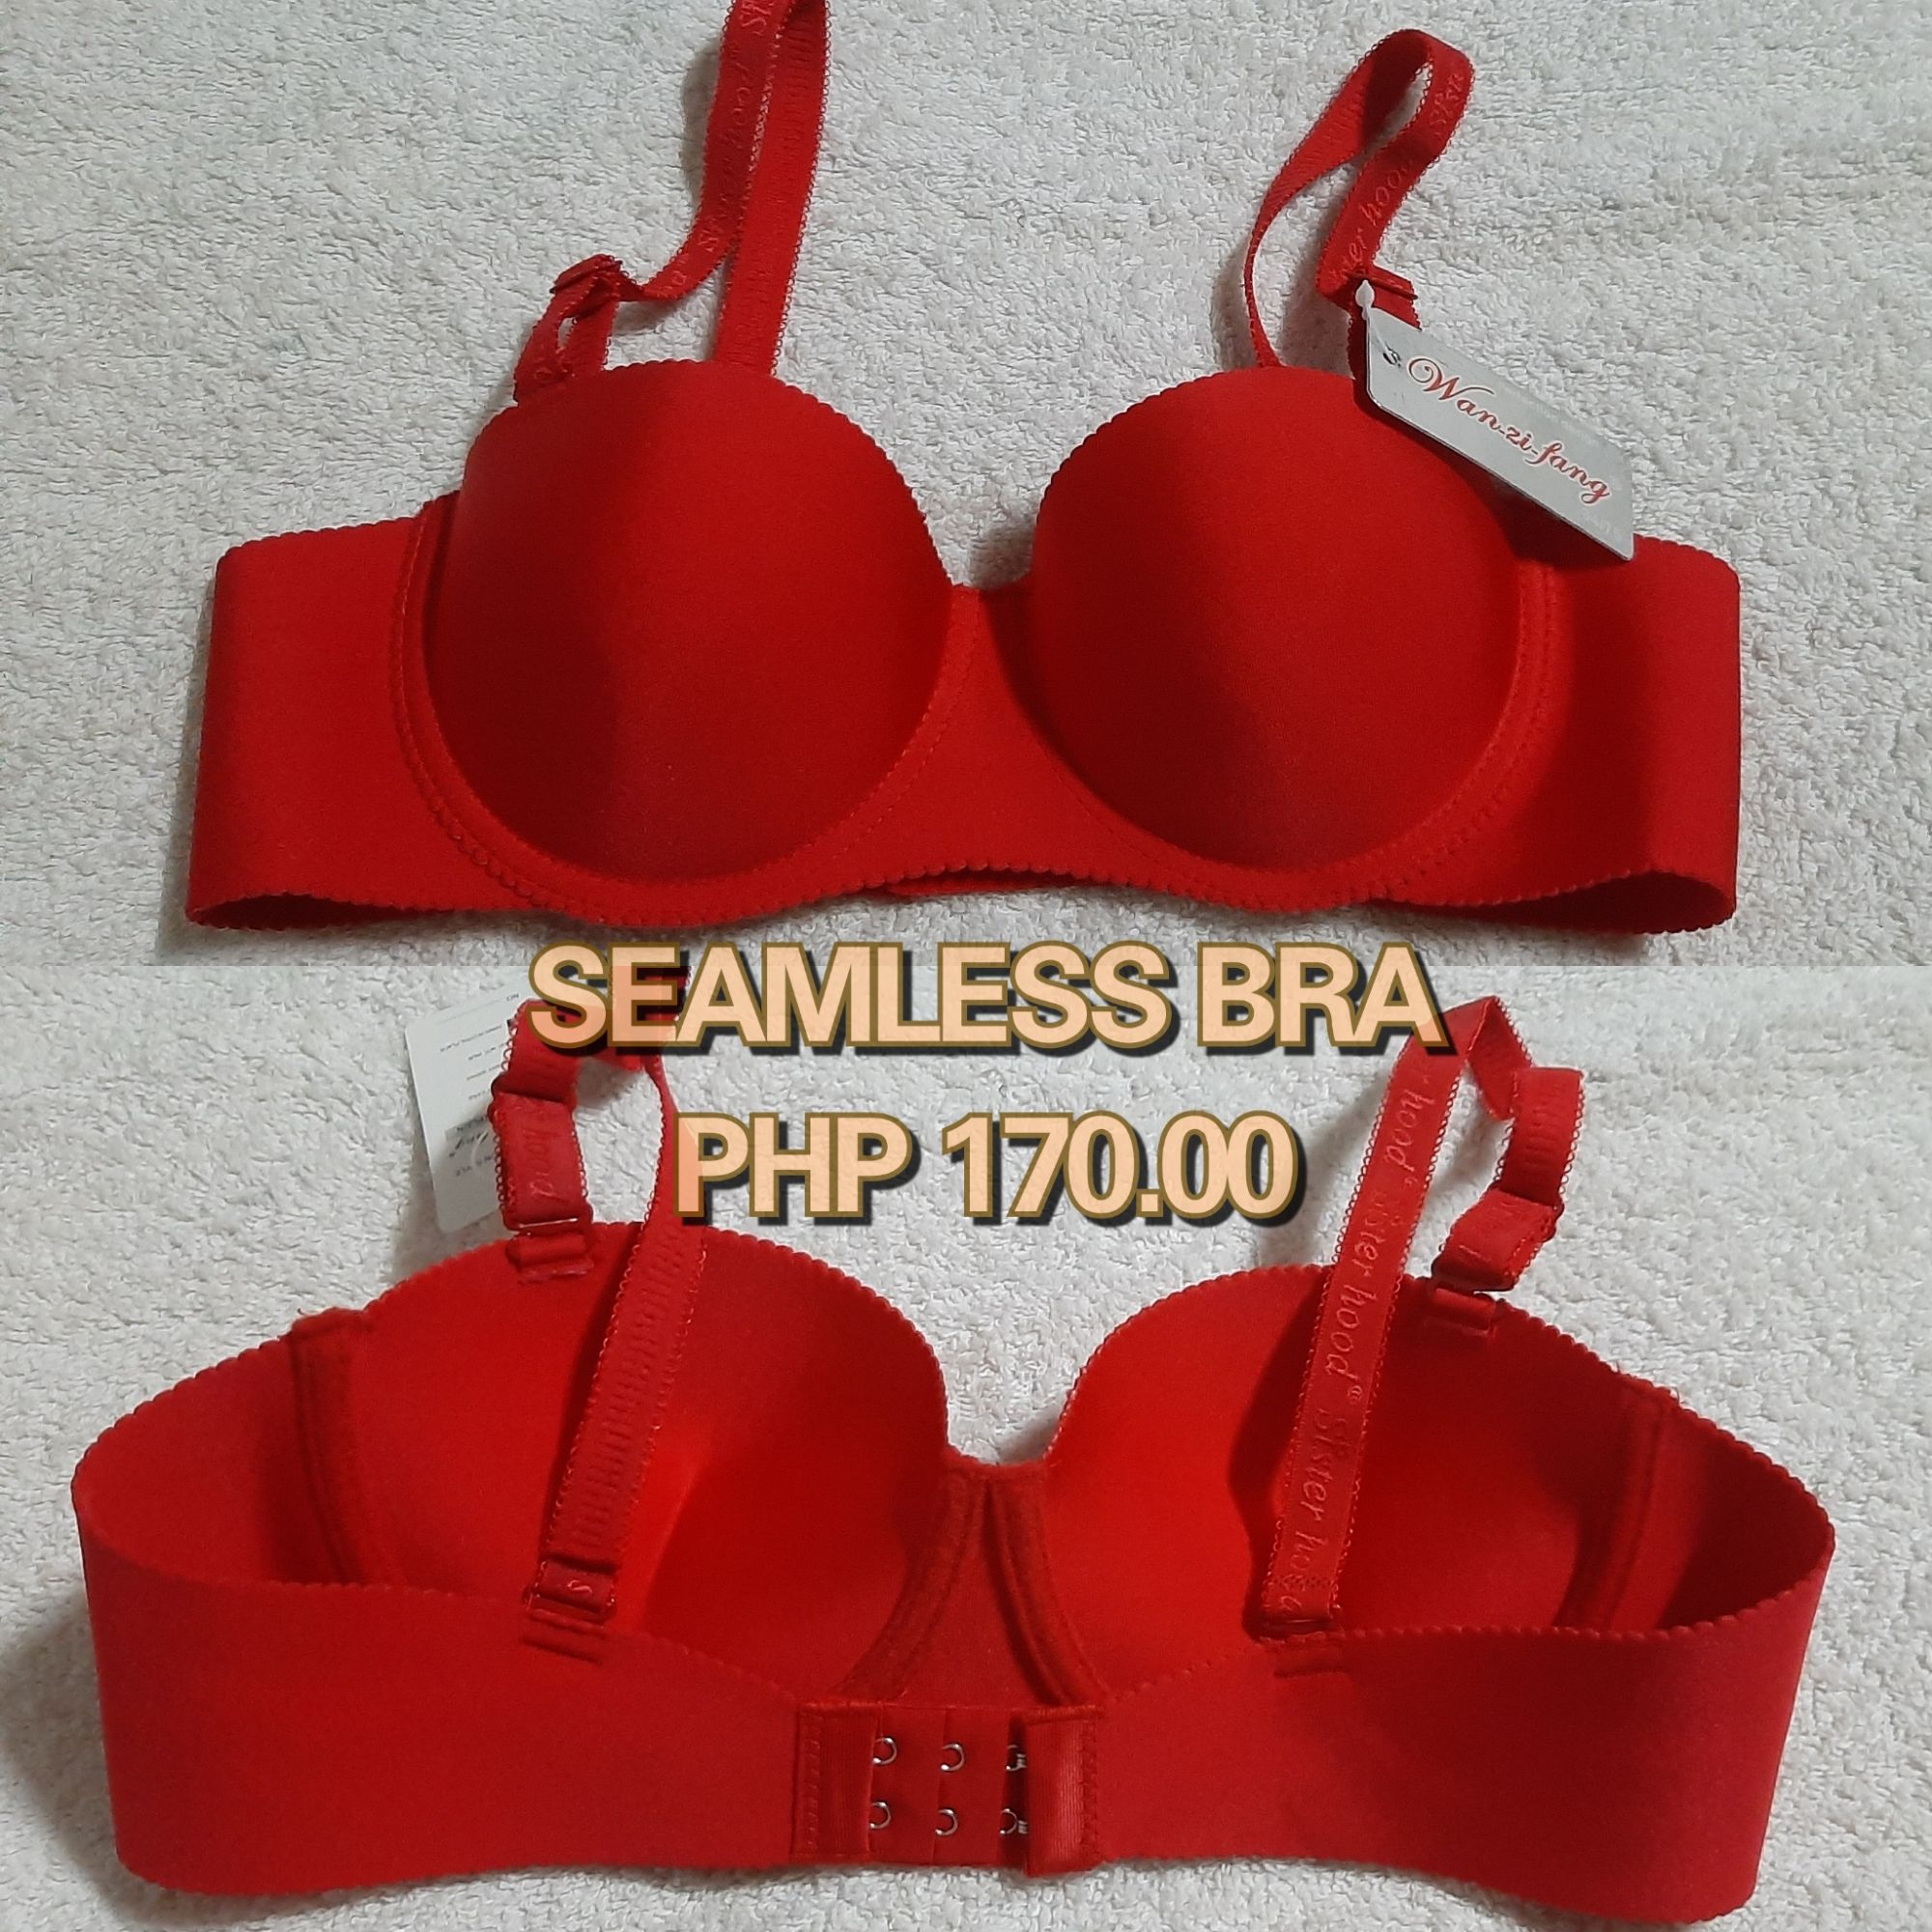 buy seamless bra online